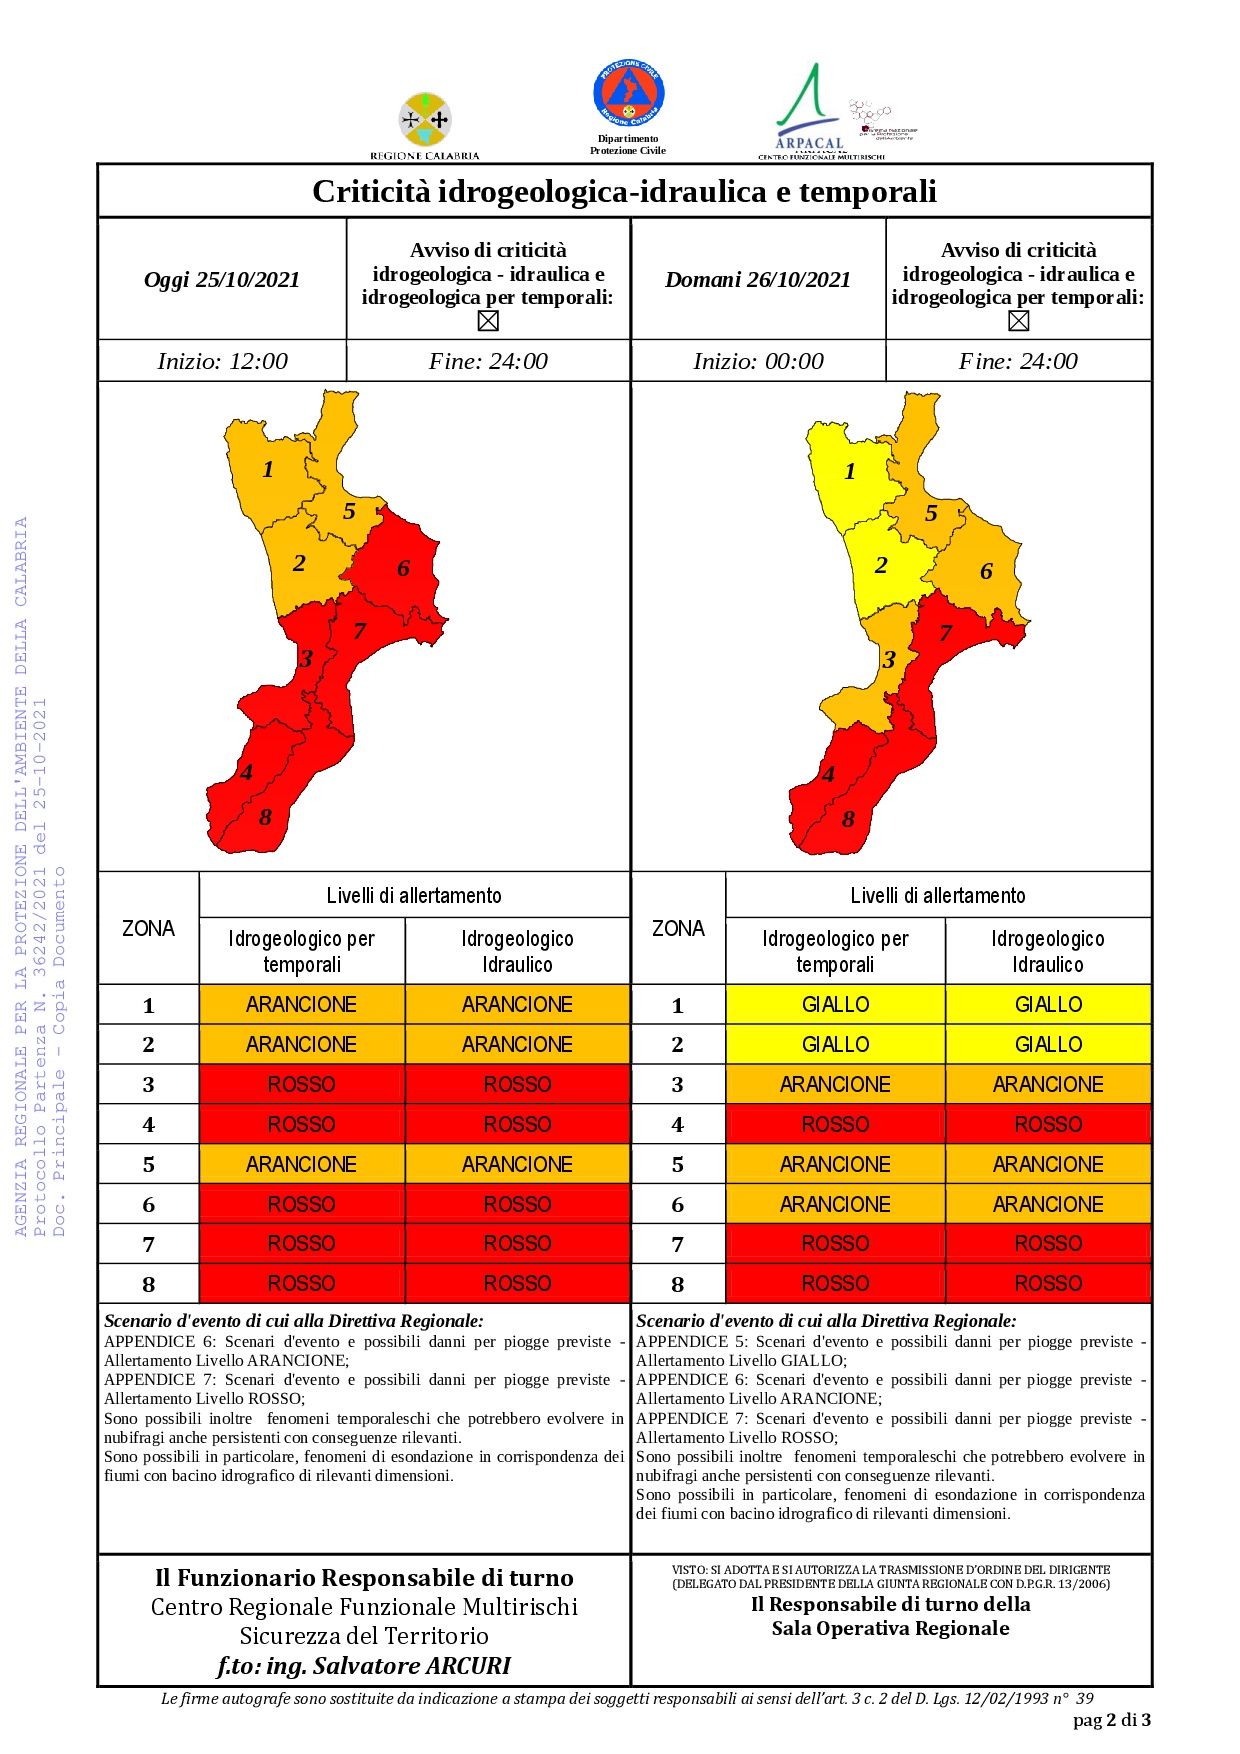 Criticità idrogeologica-idraulica e temporali in Calabria 25-10-2021